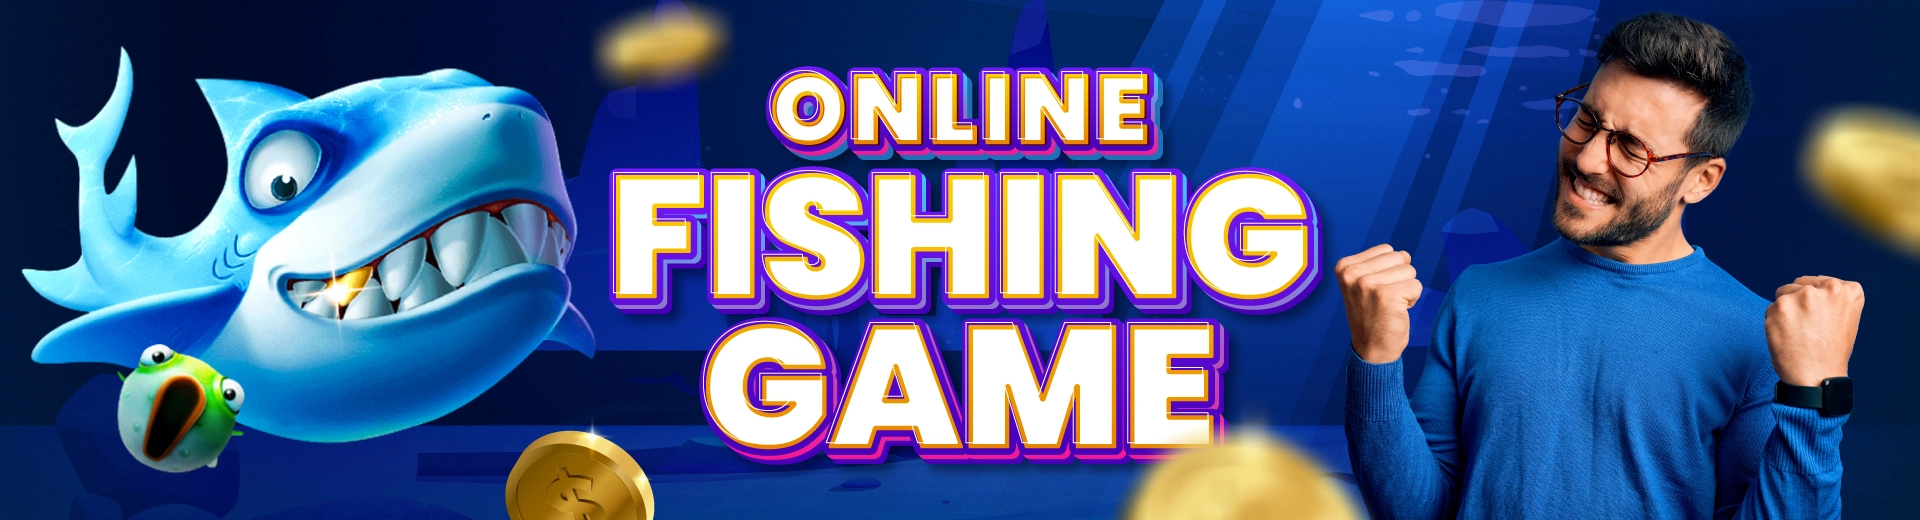 OKBet Online Casino Fishing Games